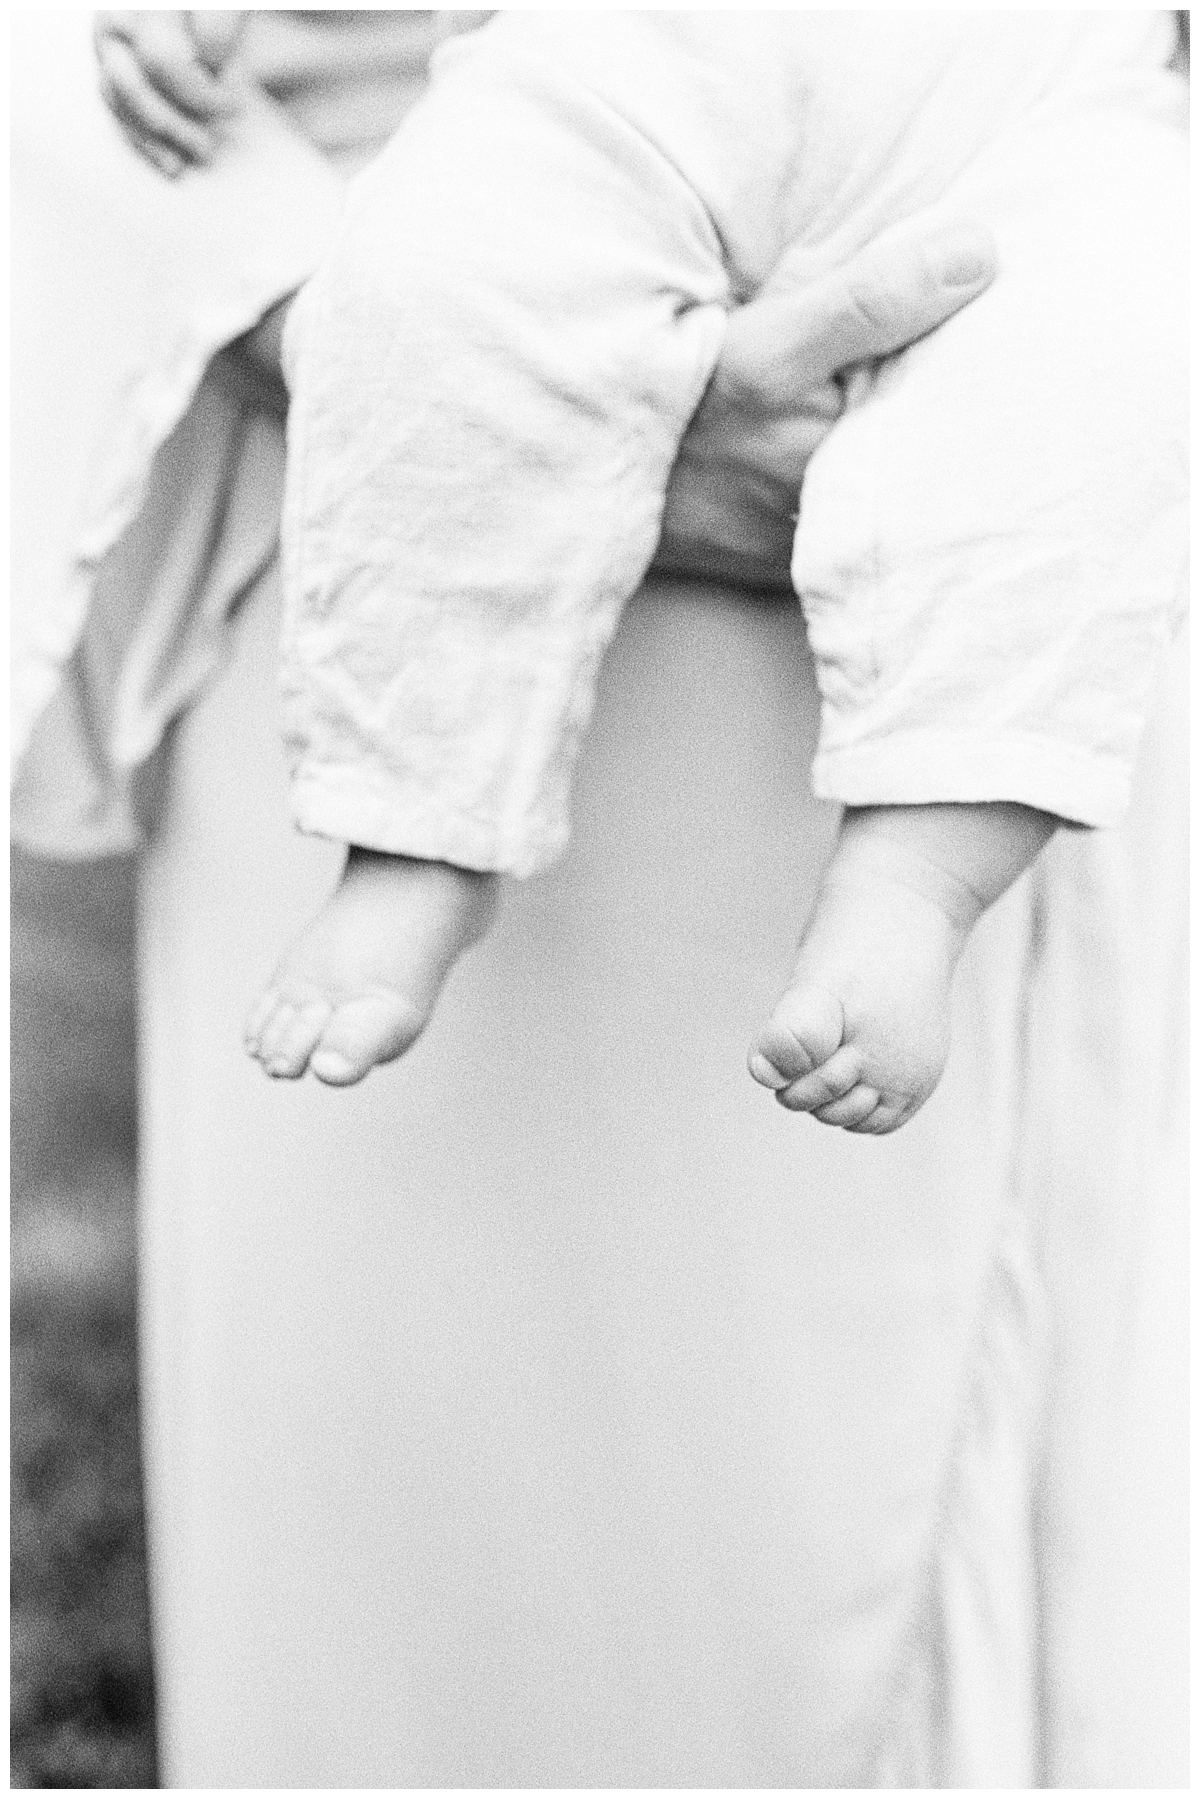 Photo of baby toes by Murfreesboro photographer Grace Paul.